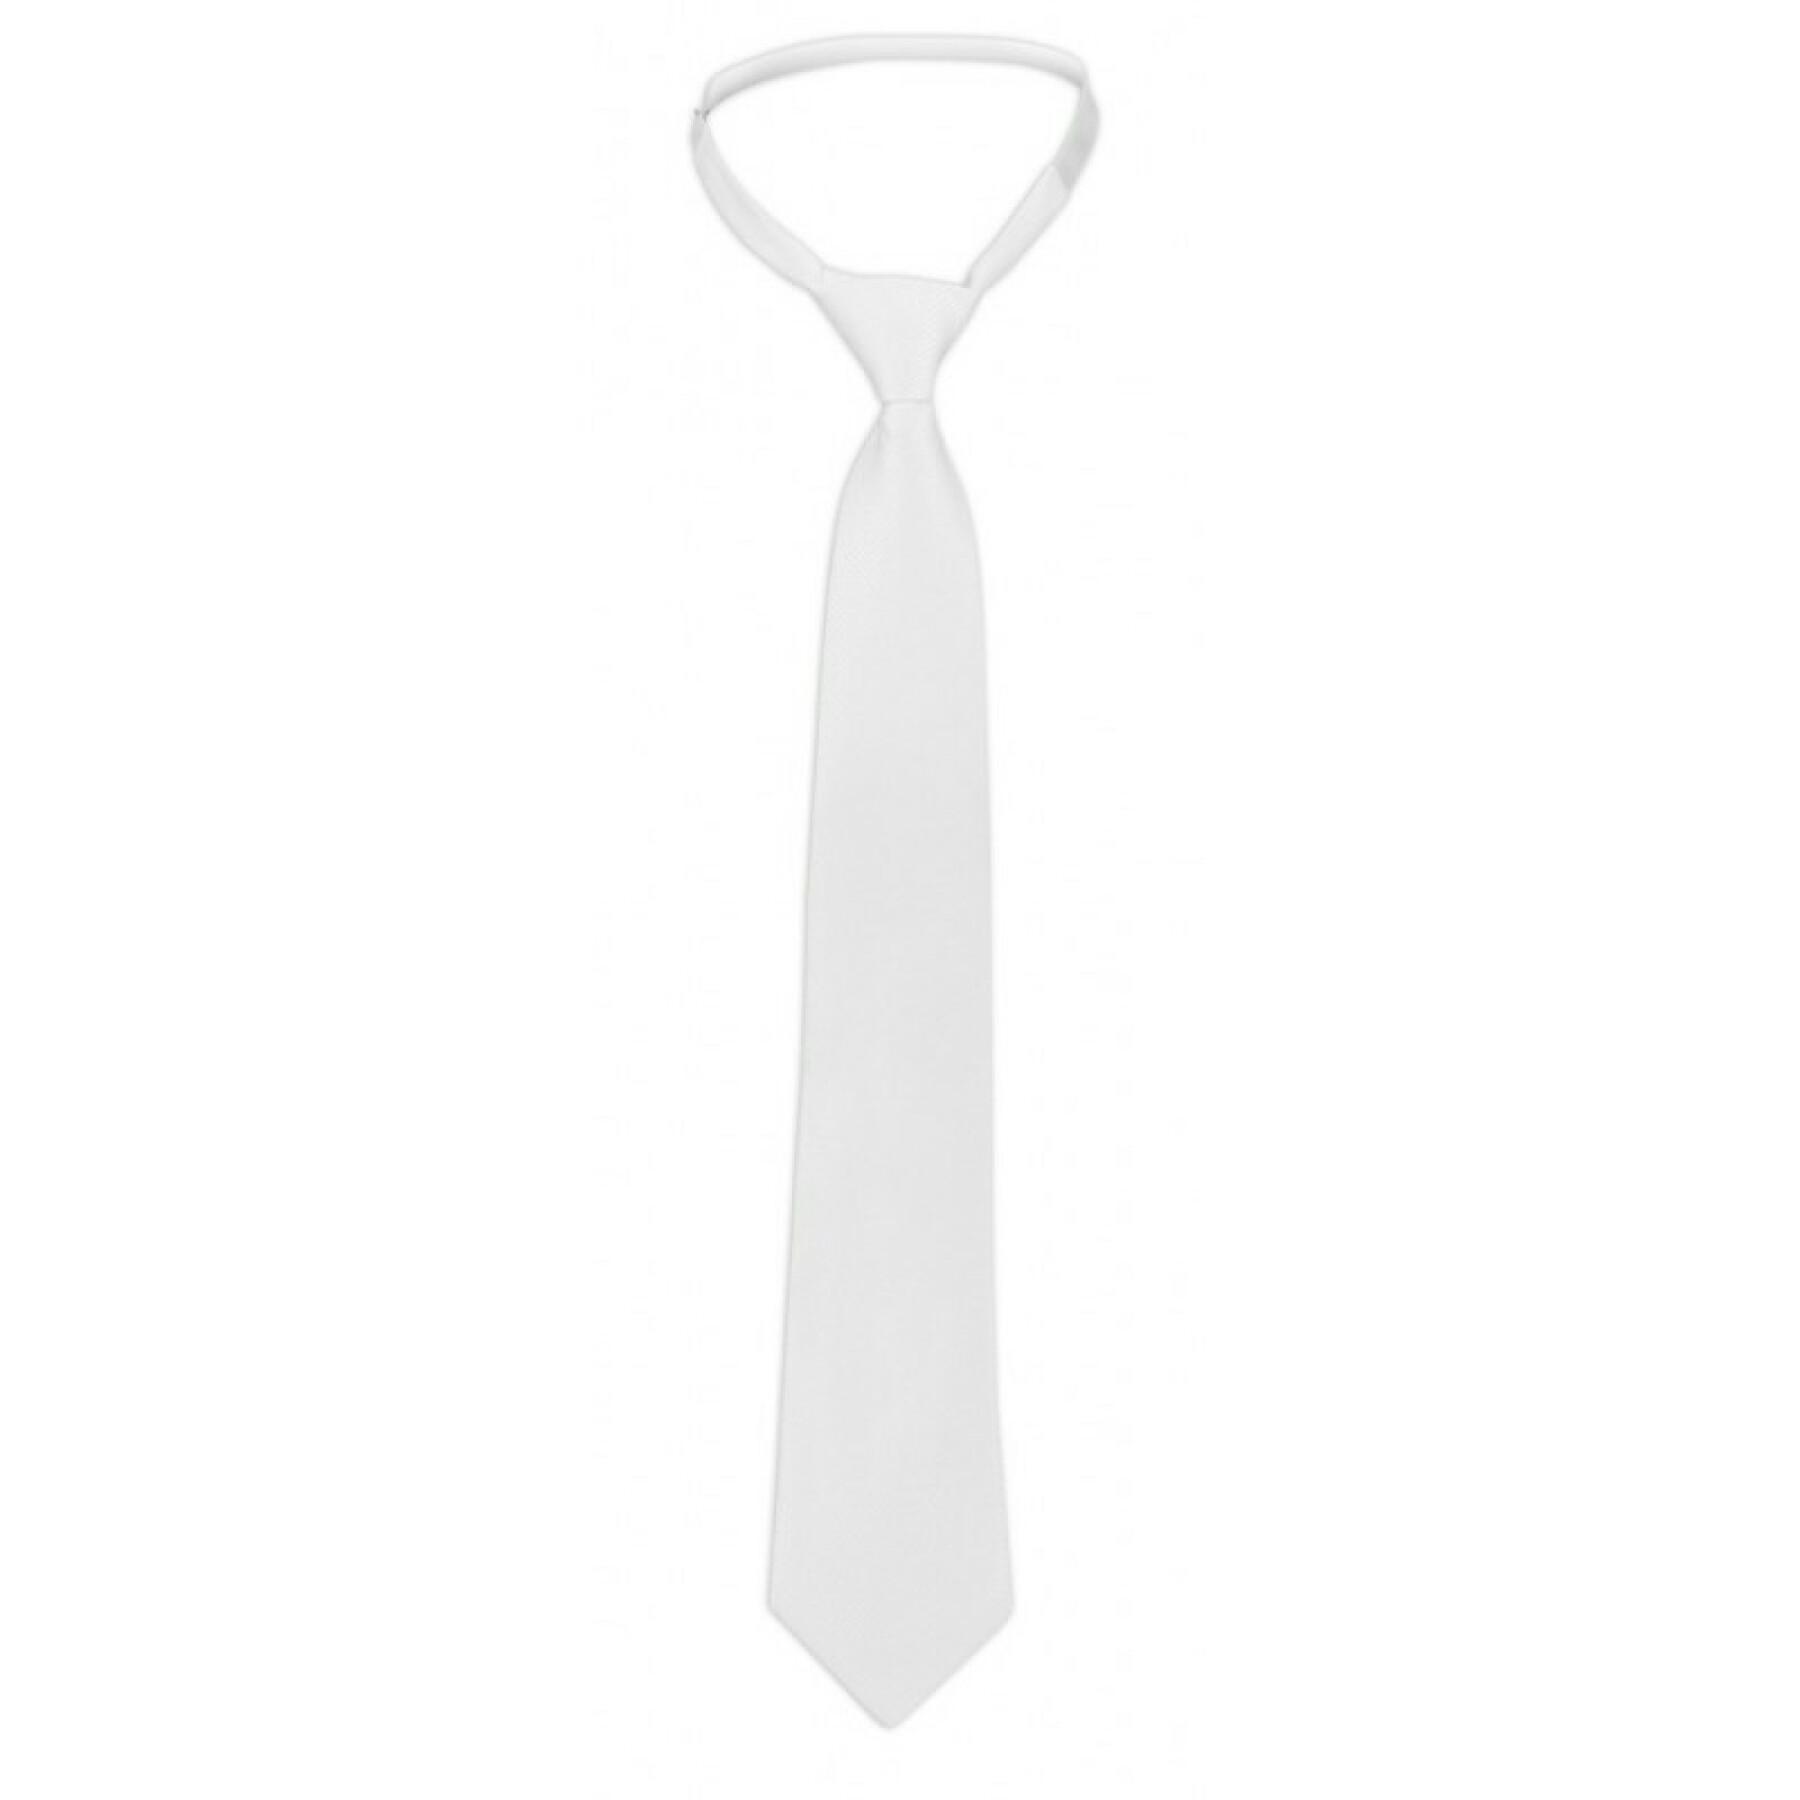 Wabenförmige Krawatte mit Gummiband Equithème Trevira